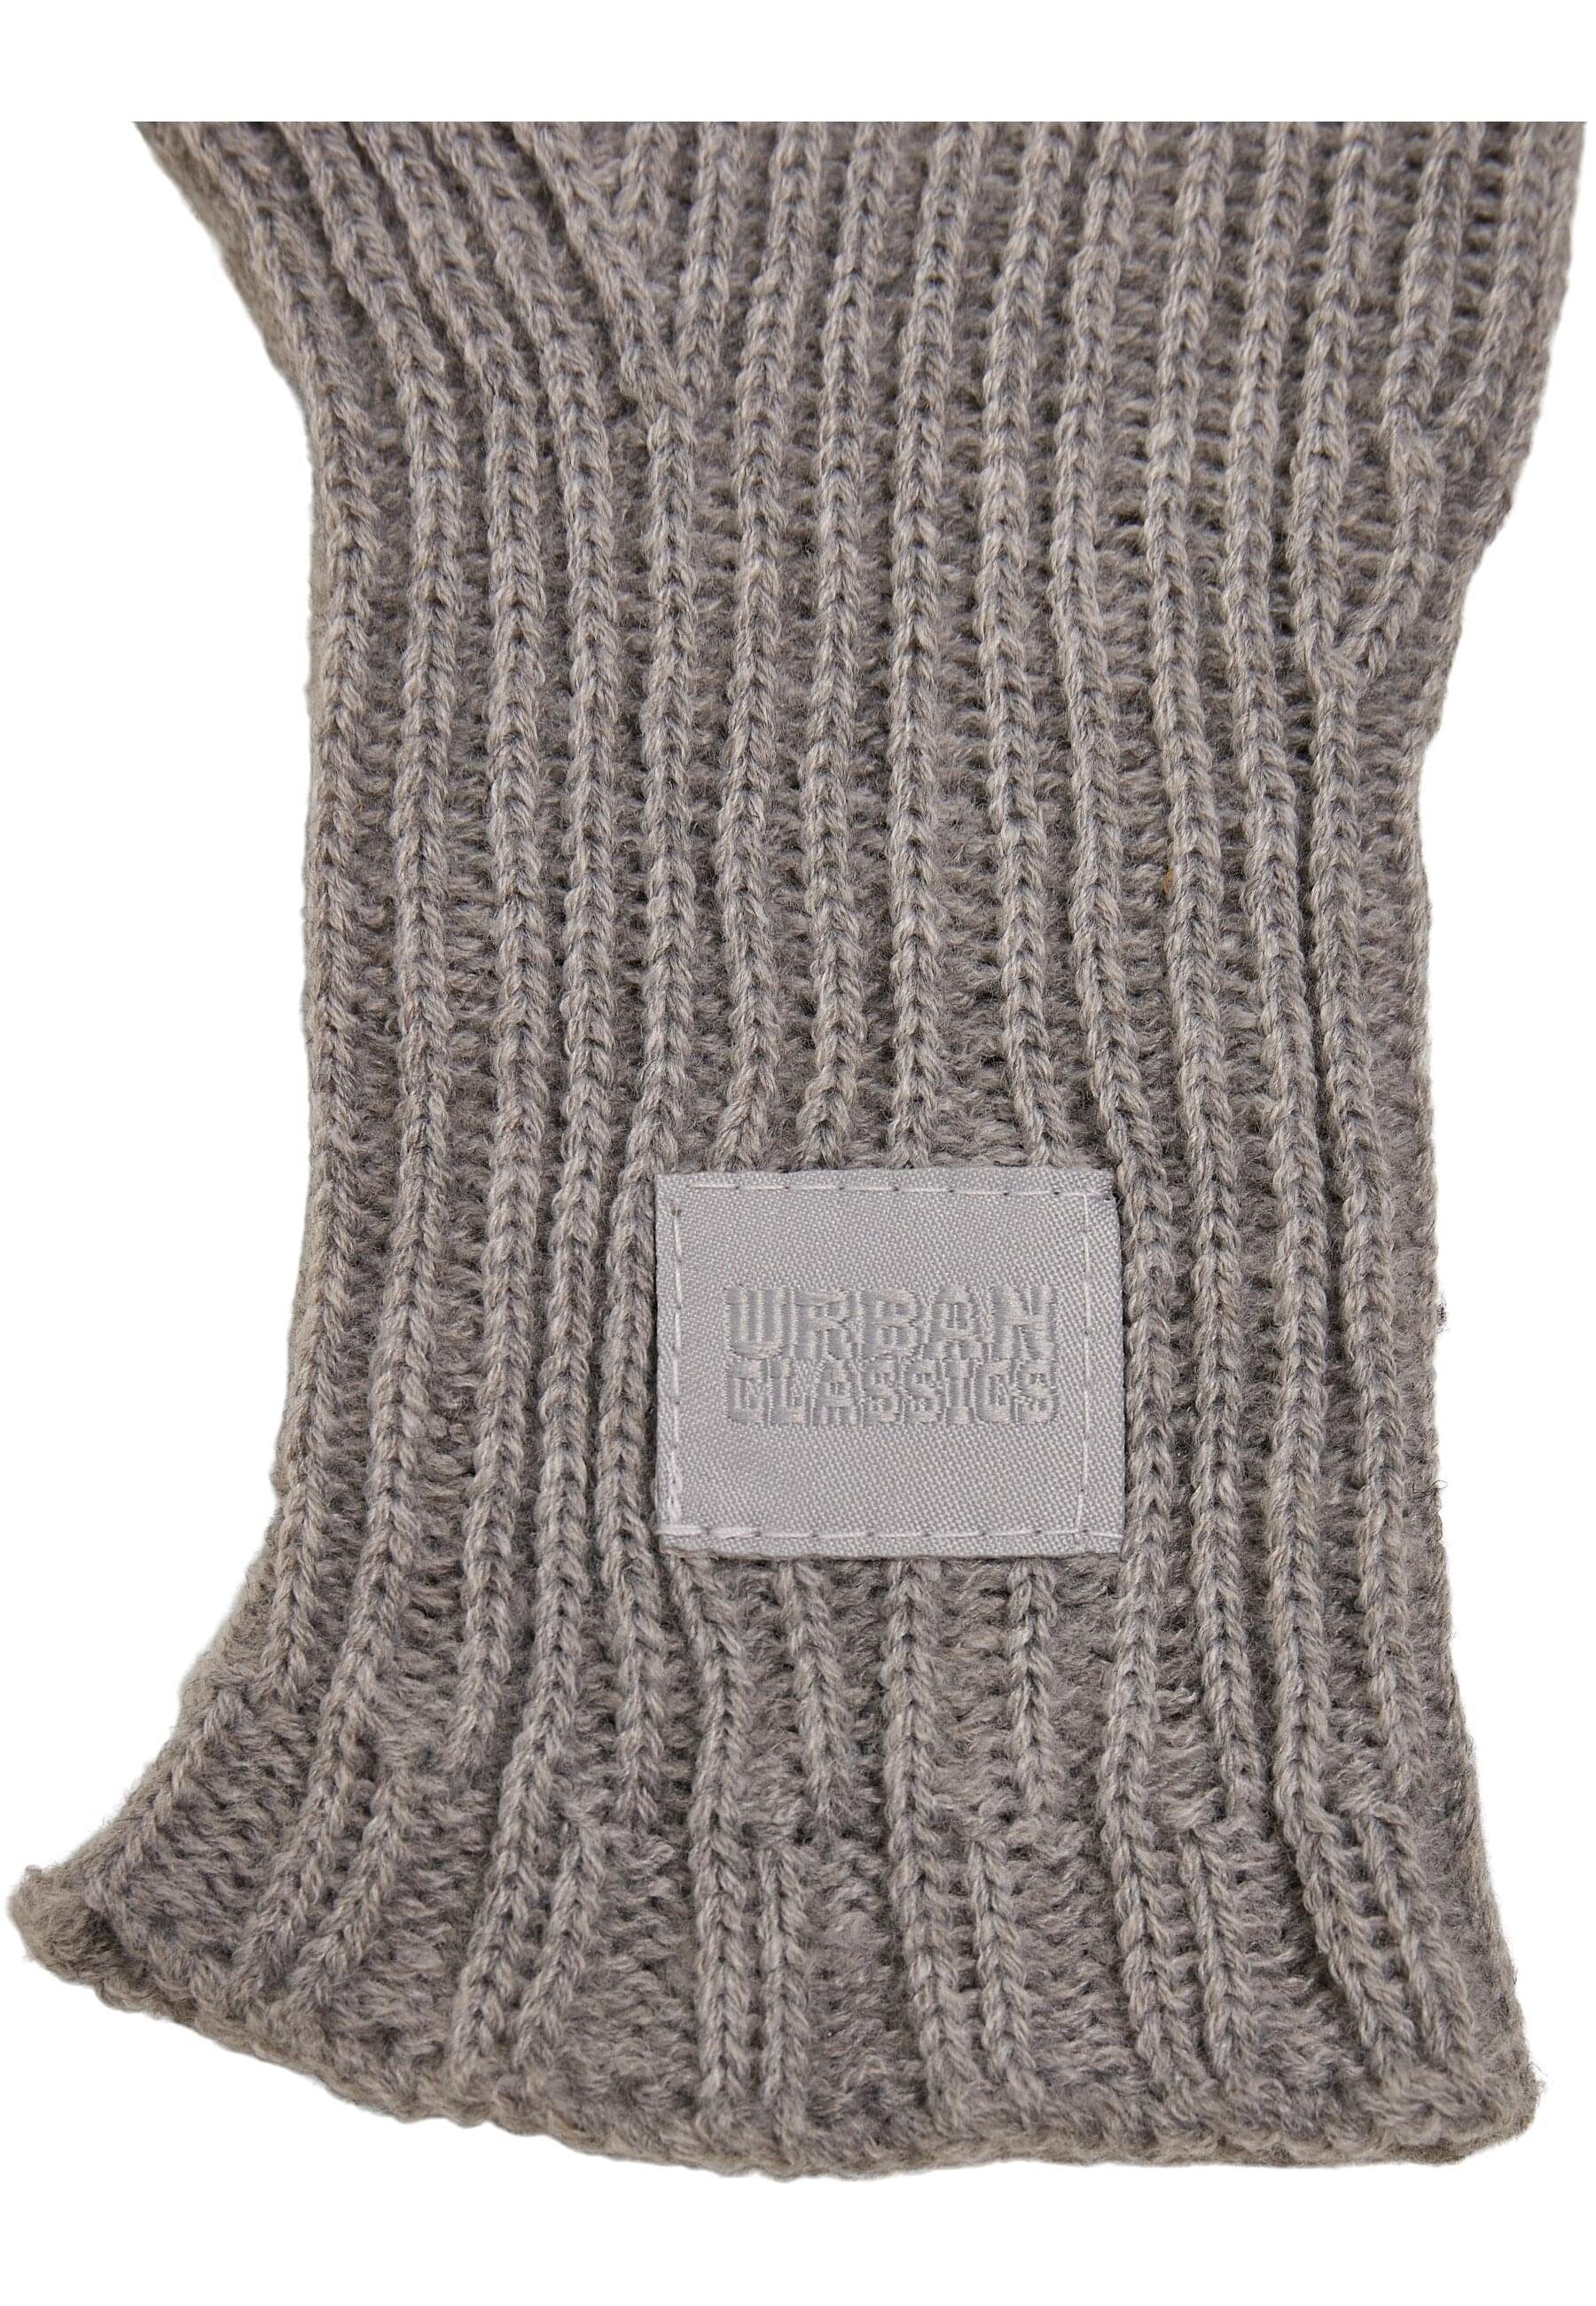 Mix Knitted CLASSICS Smart URBAN Gloves heathergrey Unisex Baumwollhandschuhe Wool